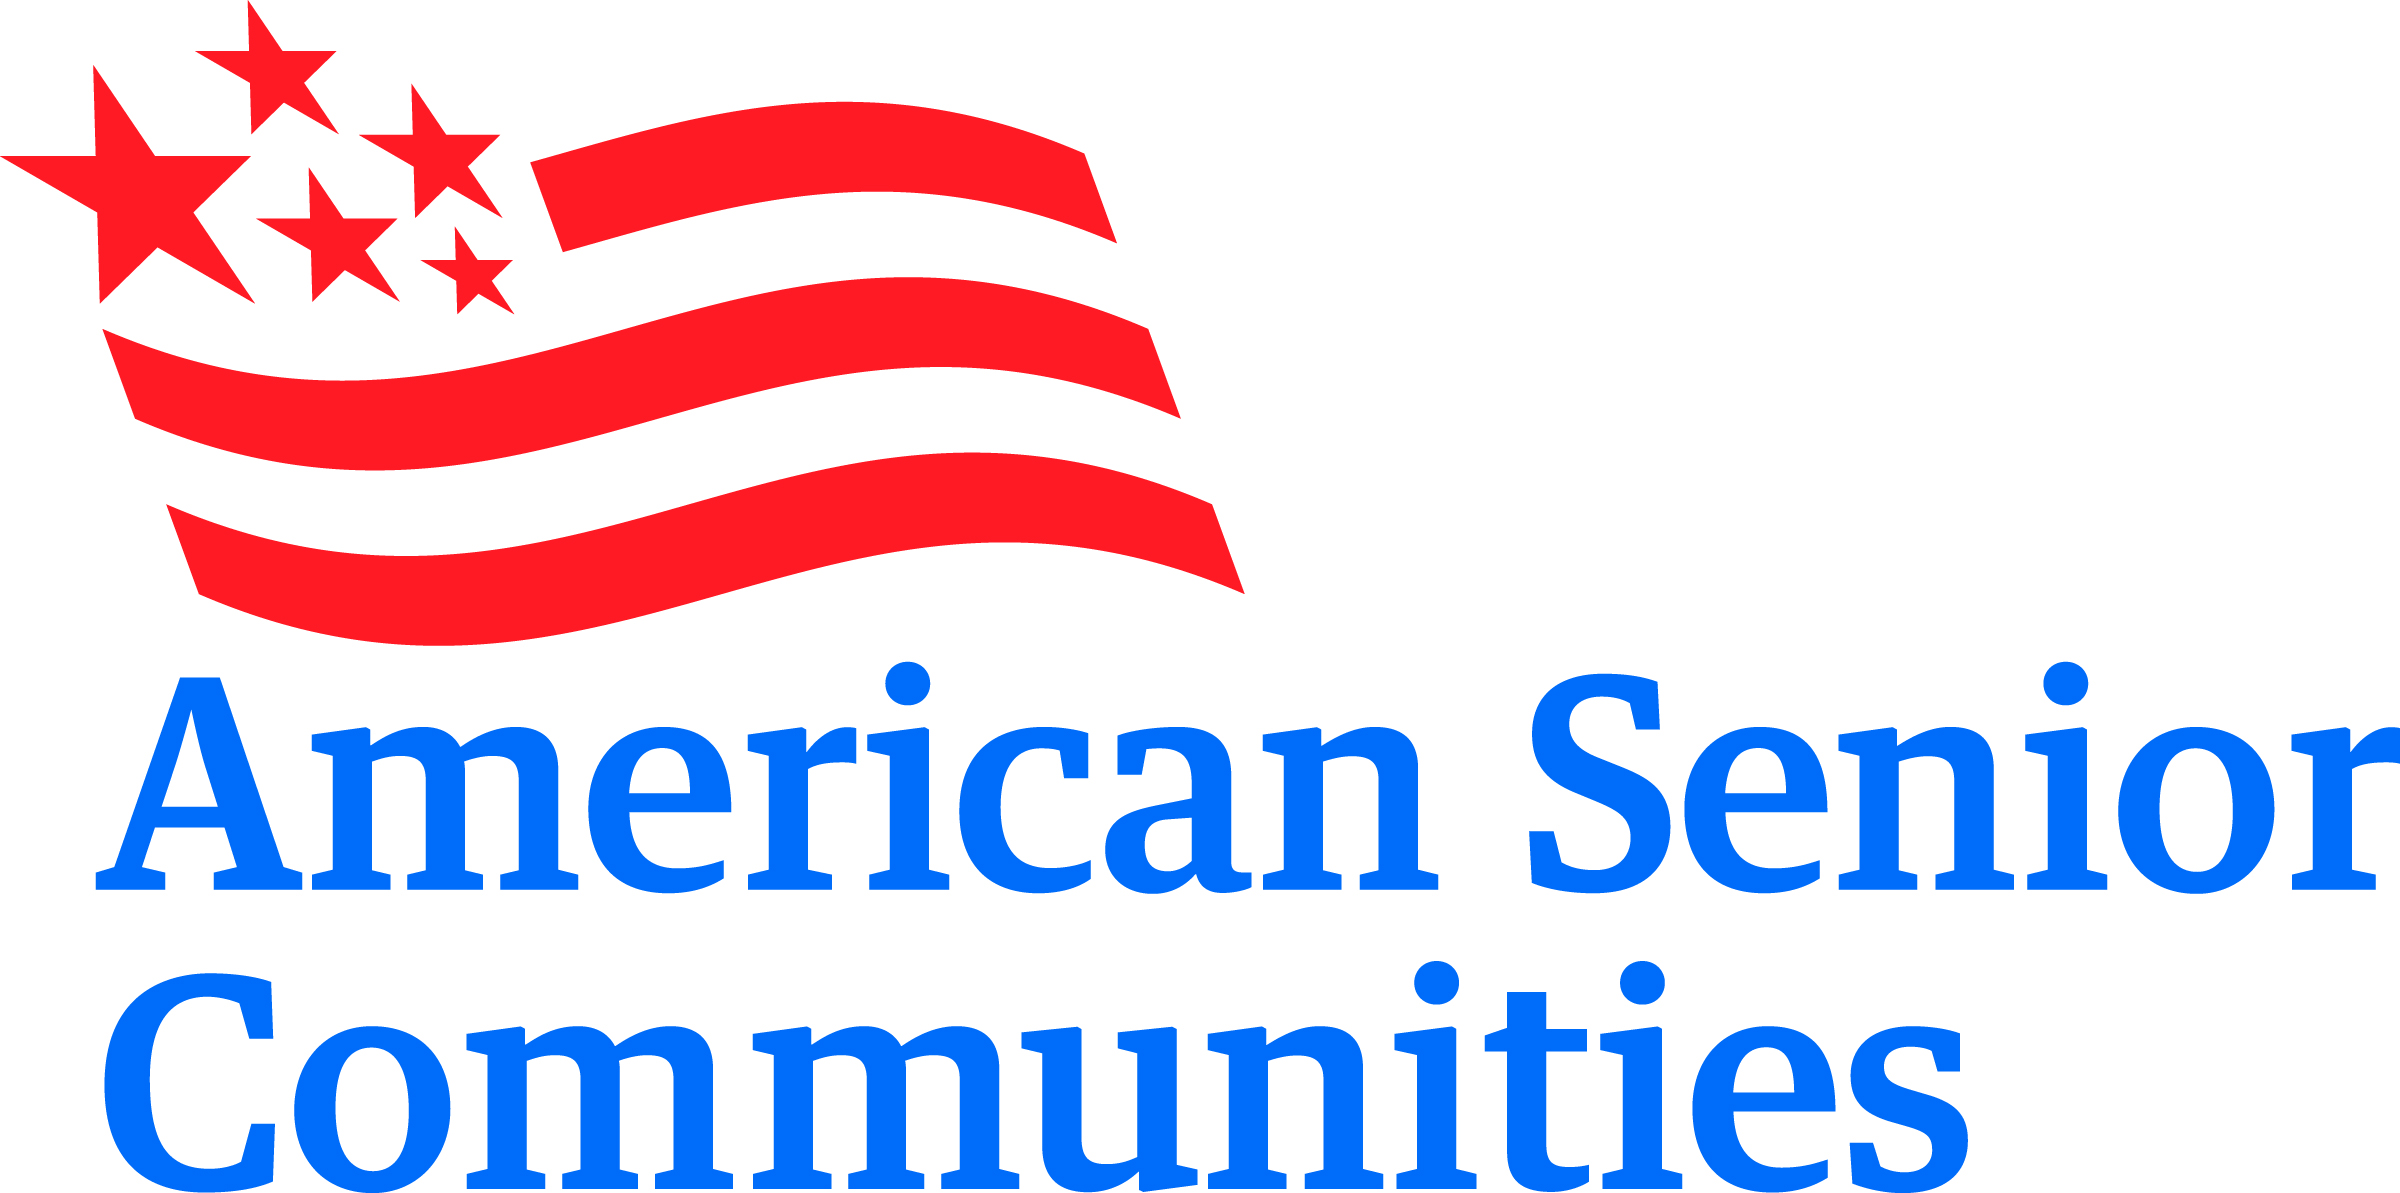 P. Comunidades estadounidenses para personas mayores (Nivel 4)